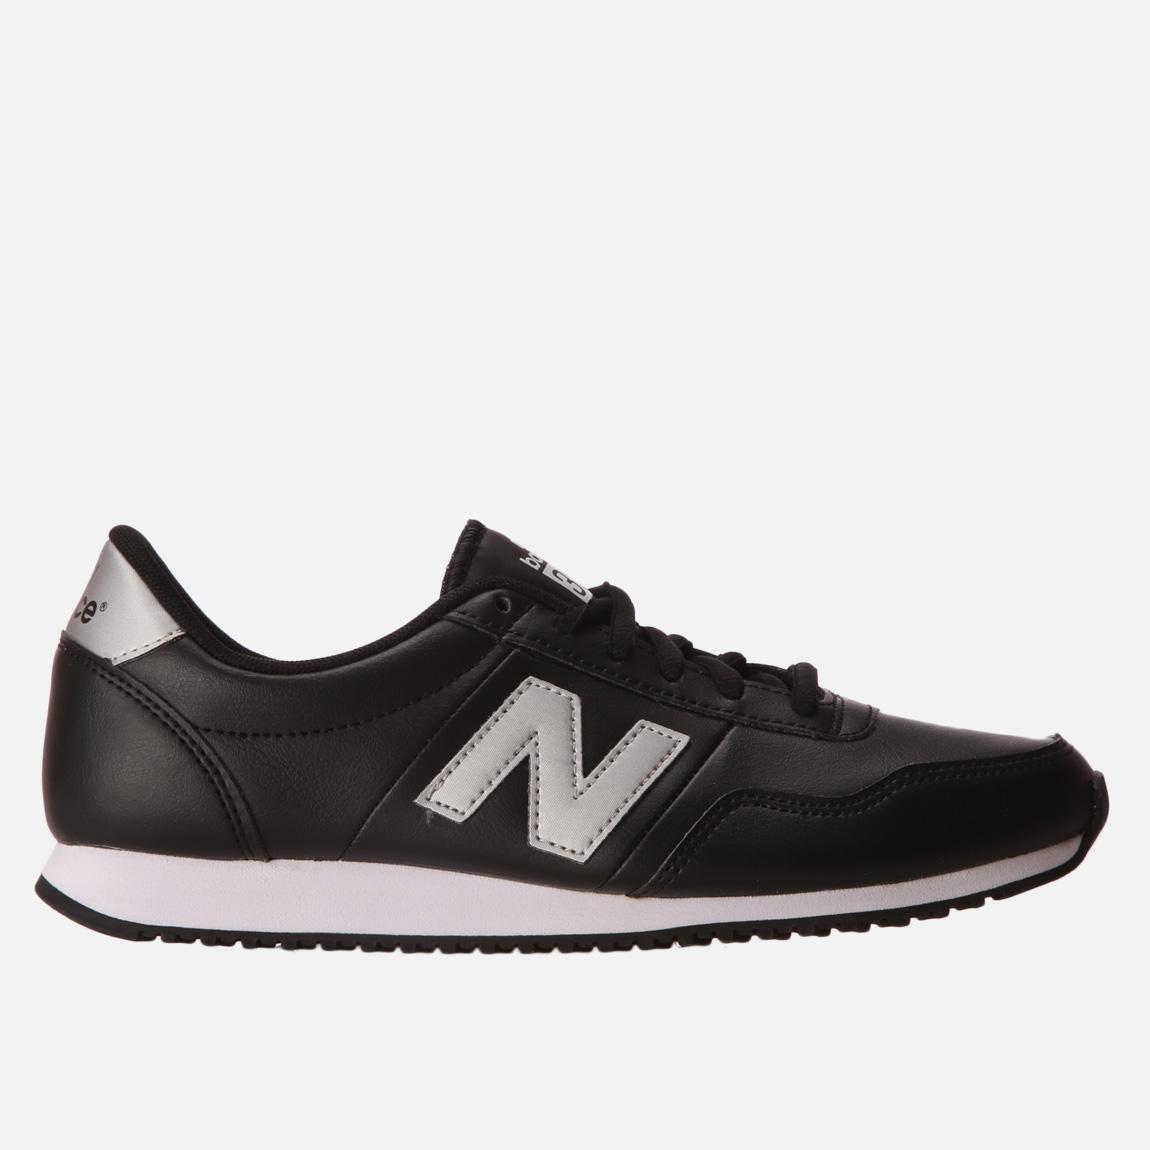 U395 – Black & White New Balance Sneakers | Superbalist.com